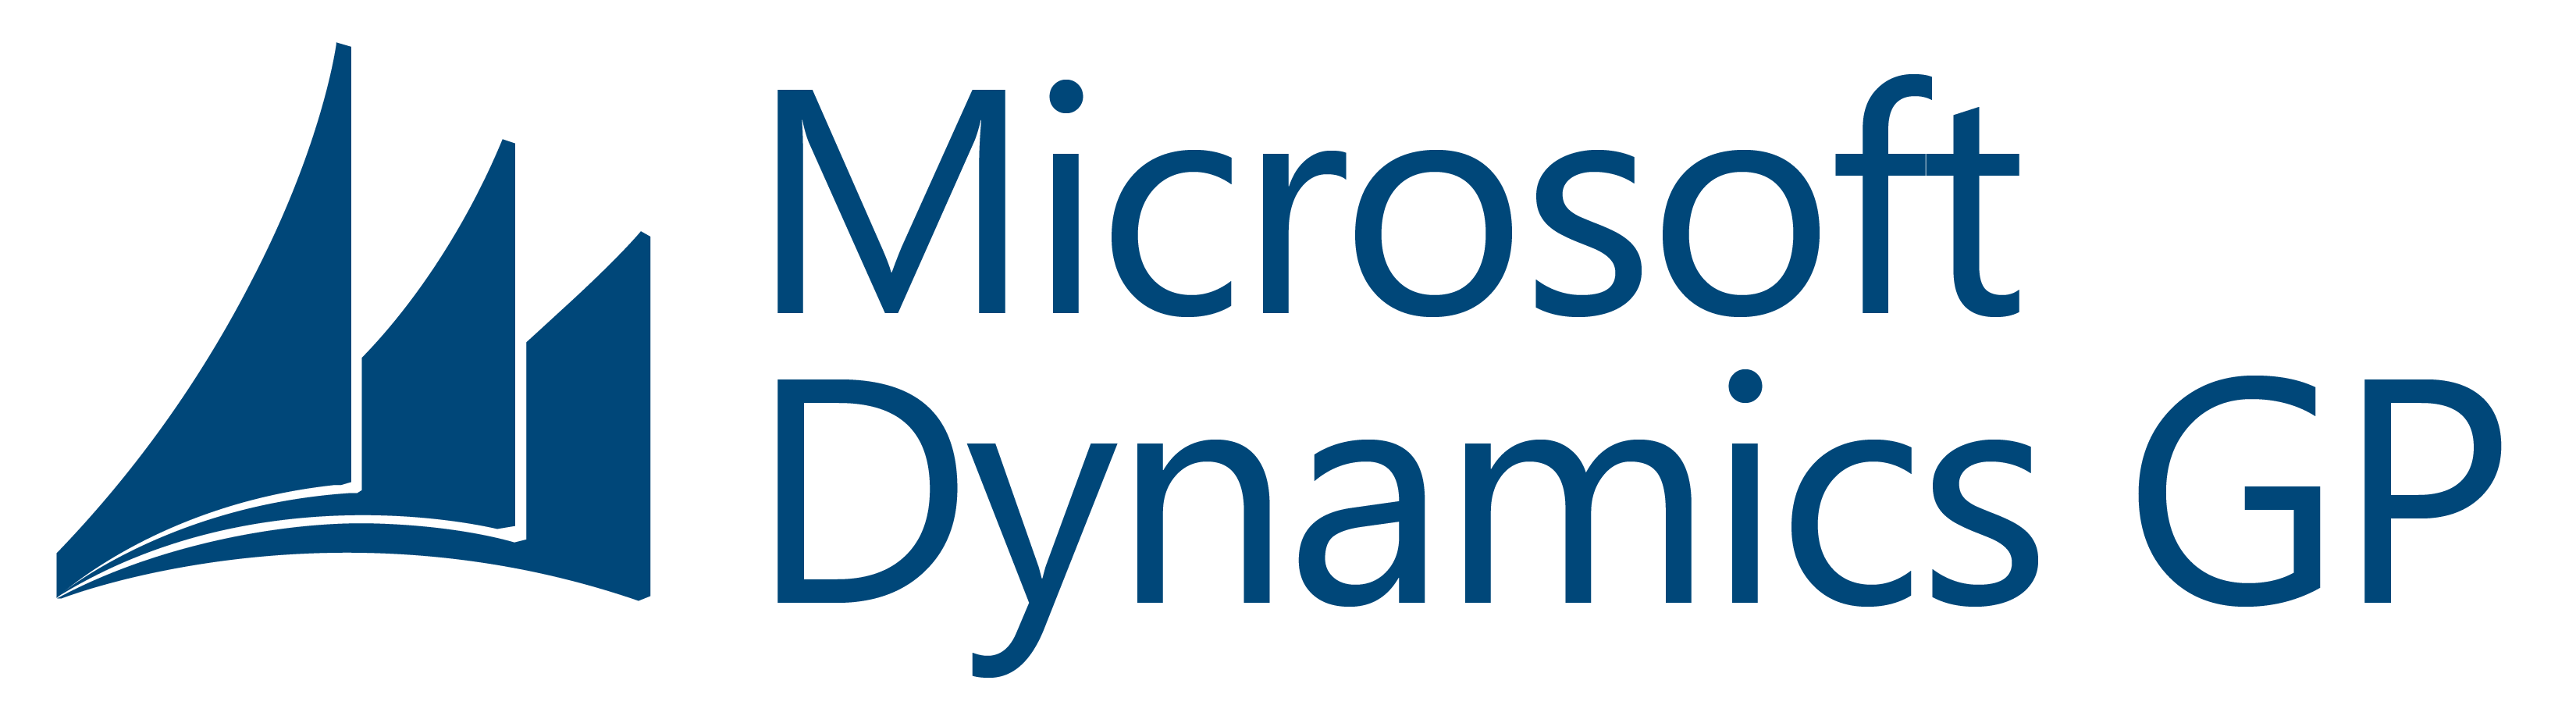 Dynamics GP Logo - Implementation Specialists | Microsoft Dynamics GP & ERP Solutions